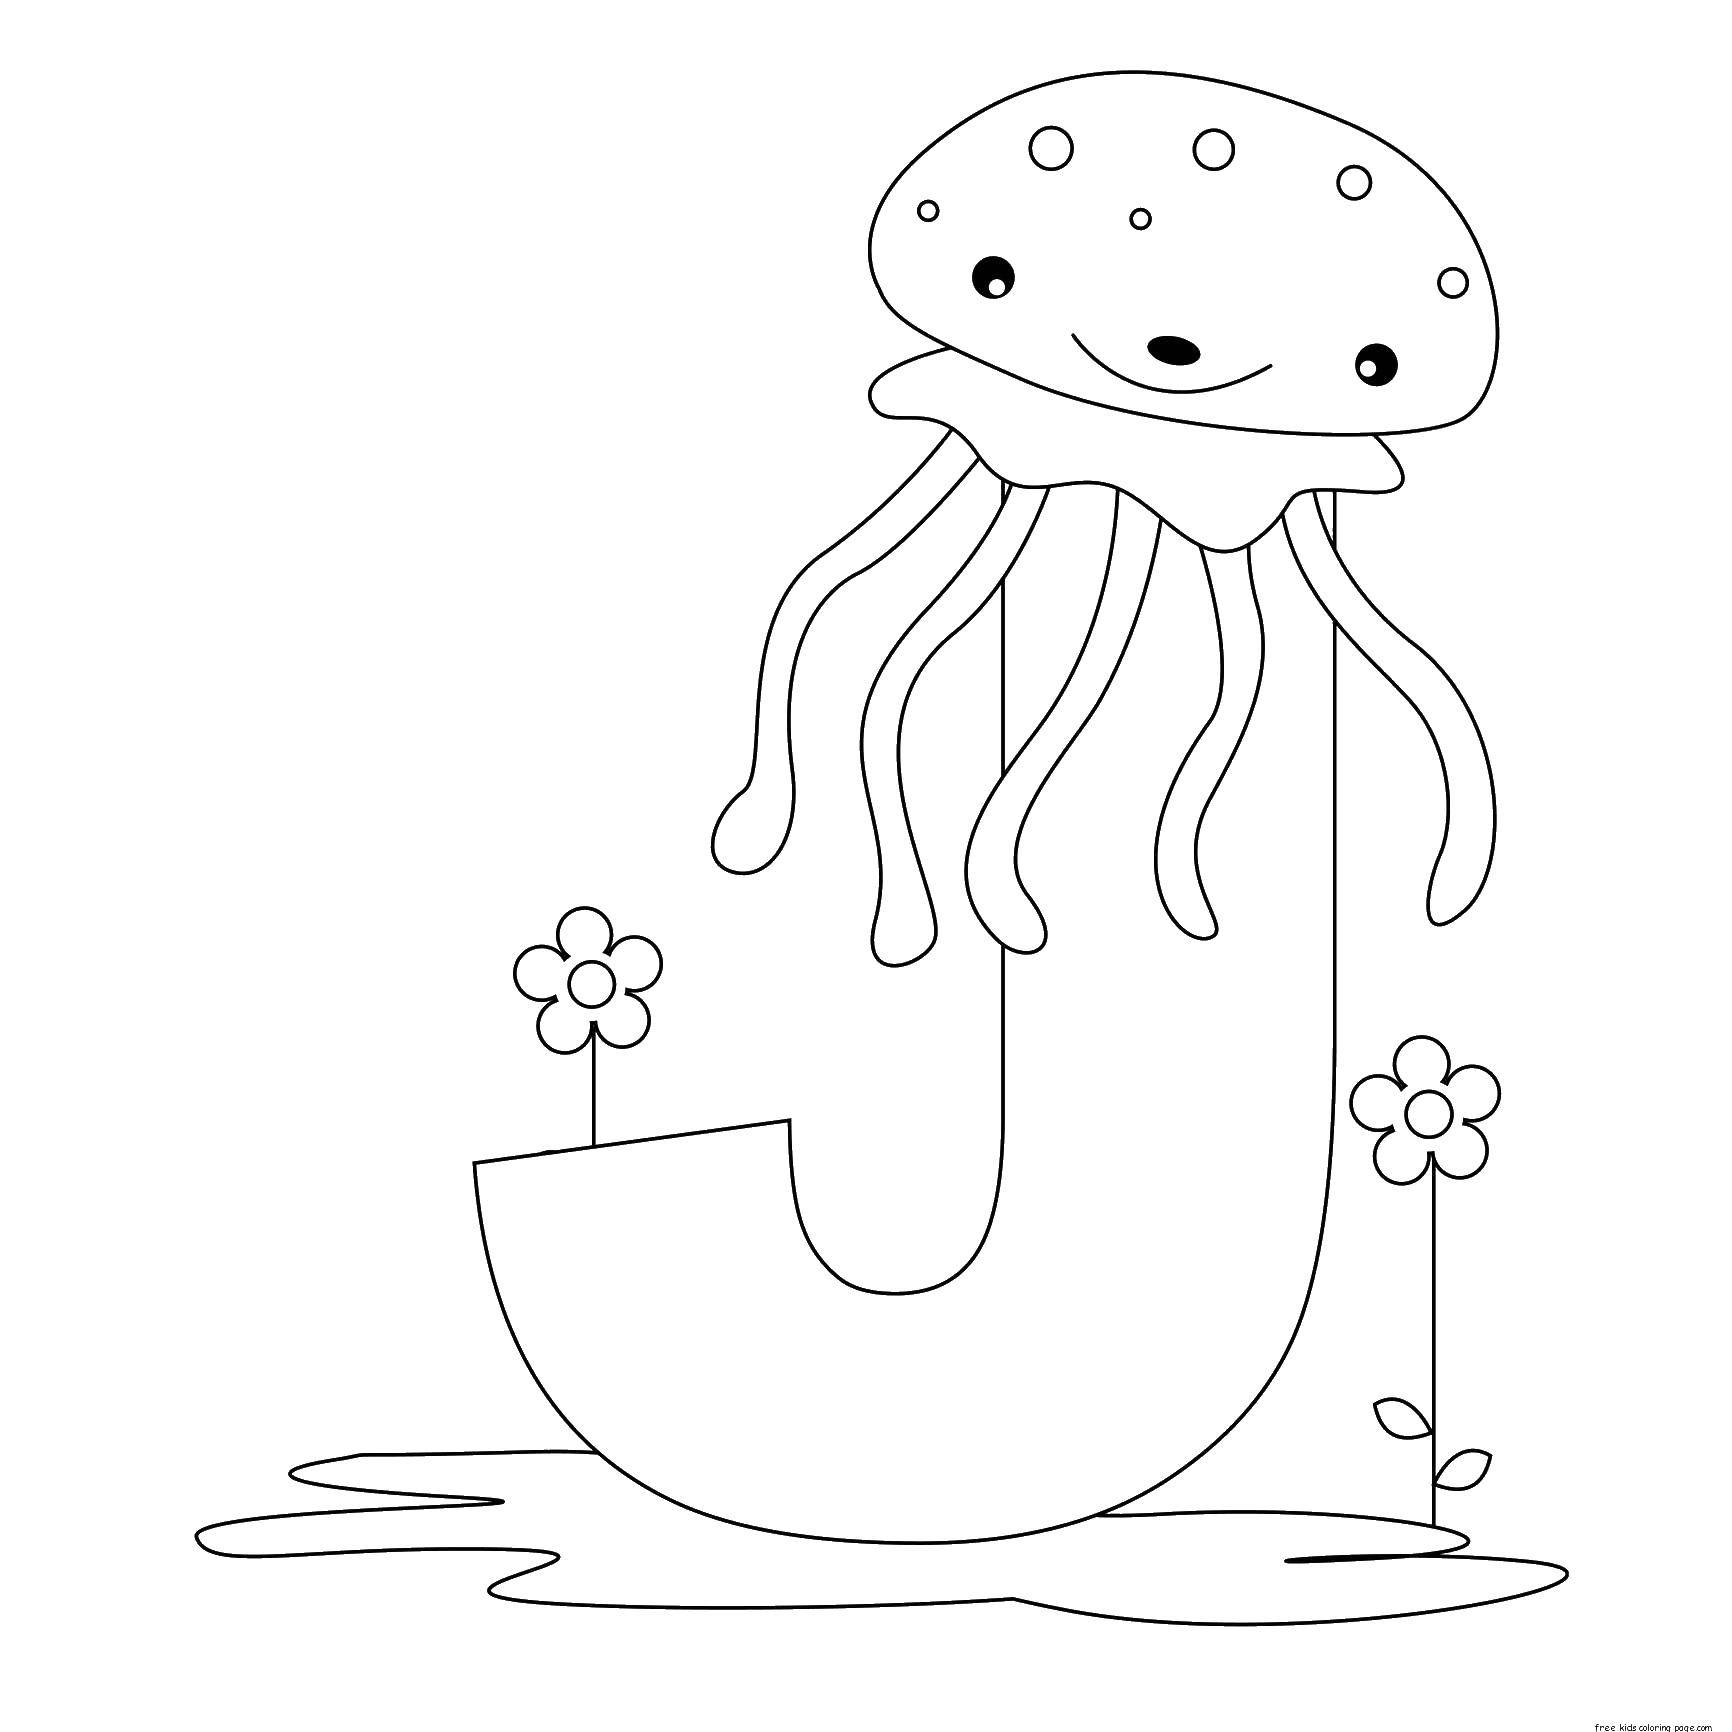 Название: Раскраска Медуза это буква м. Категория: Морские обитатели. Теги: Подводный мир, медуза.